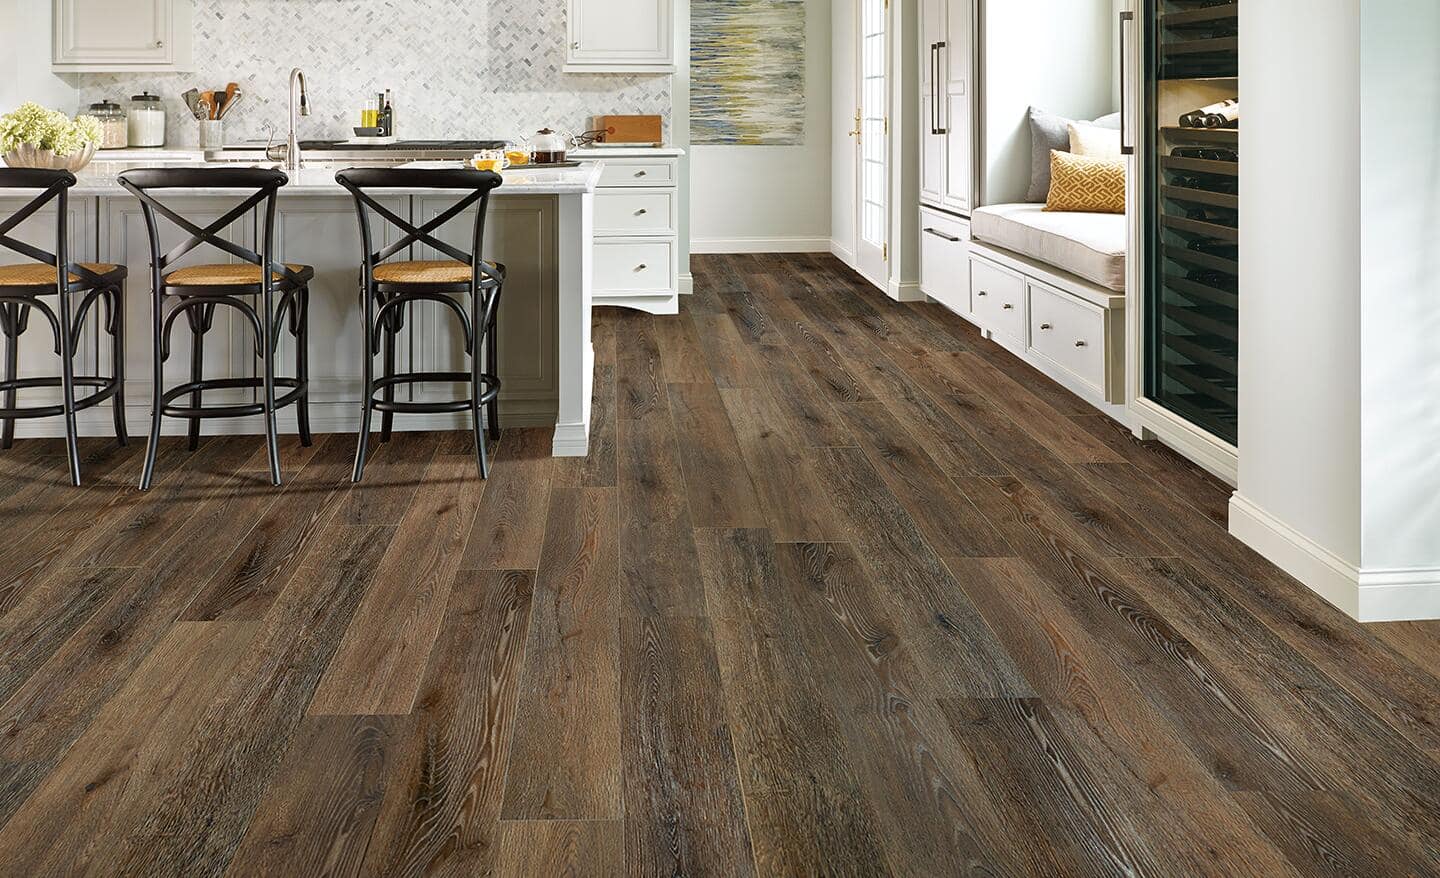 A kitchen with beautiful vinyl plank flooring.